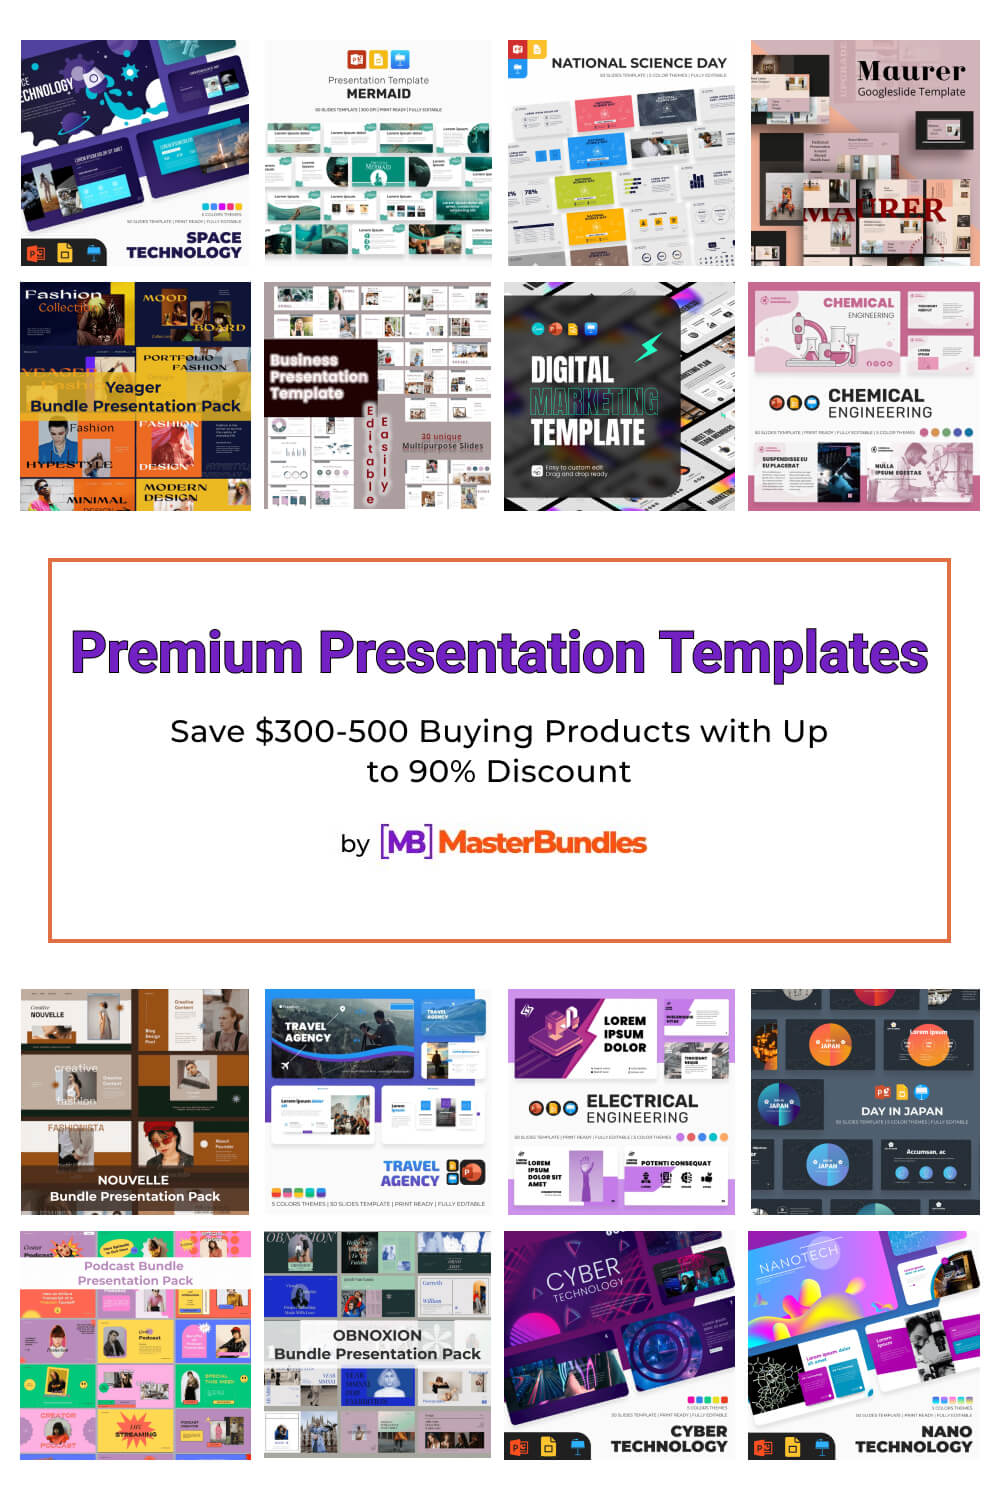 premium presentation templates pinterest image.